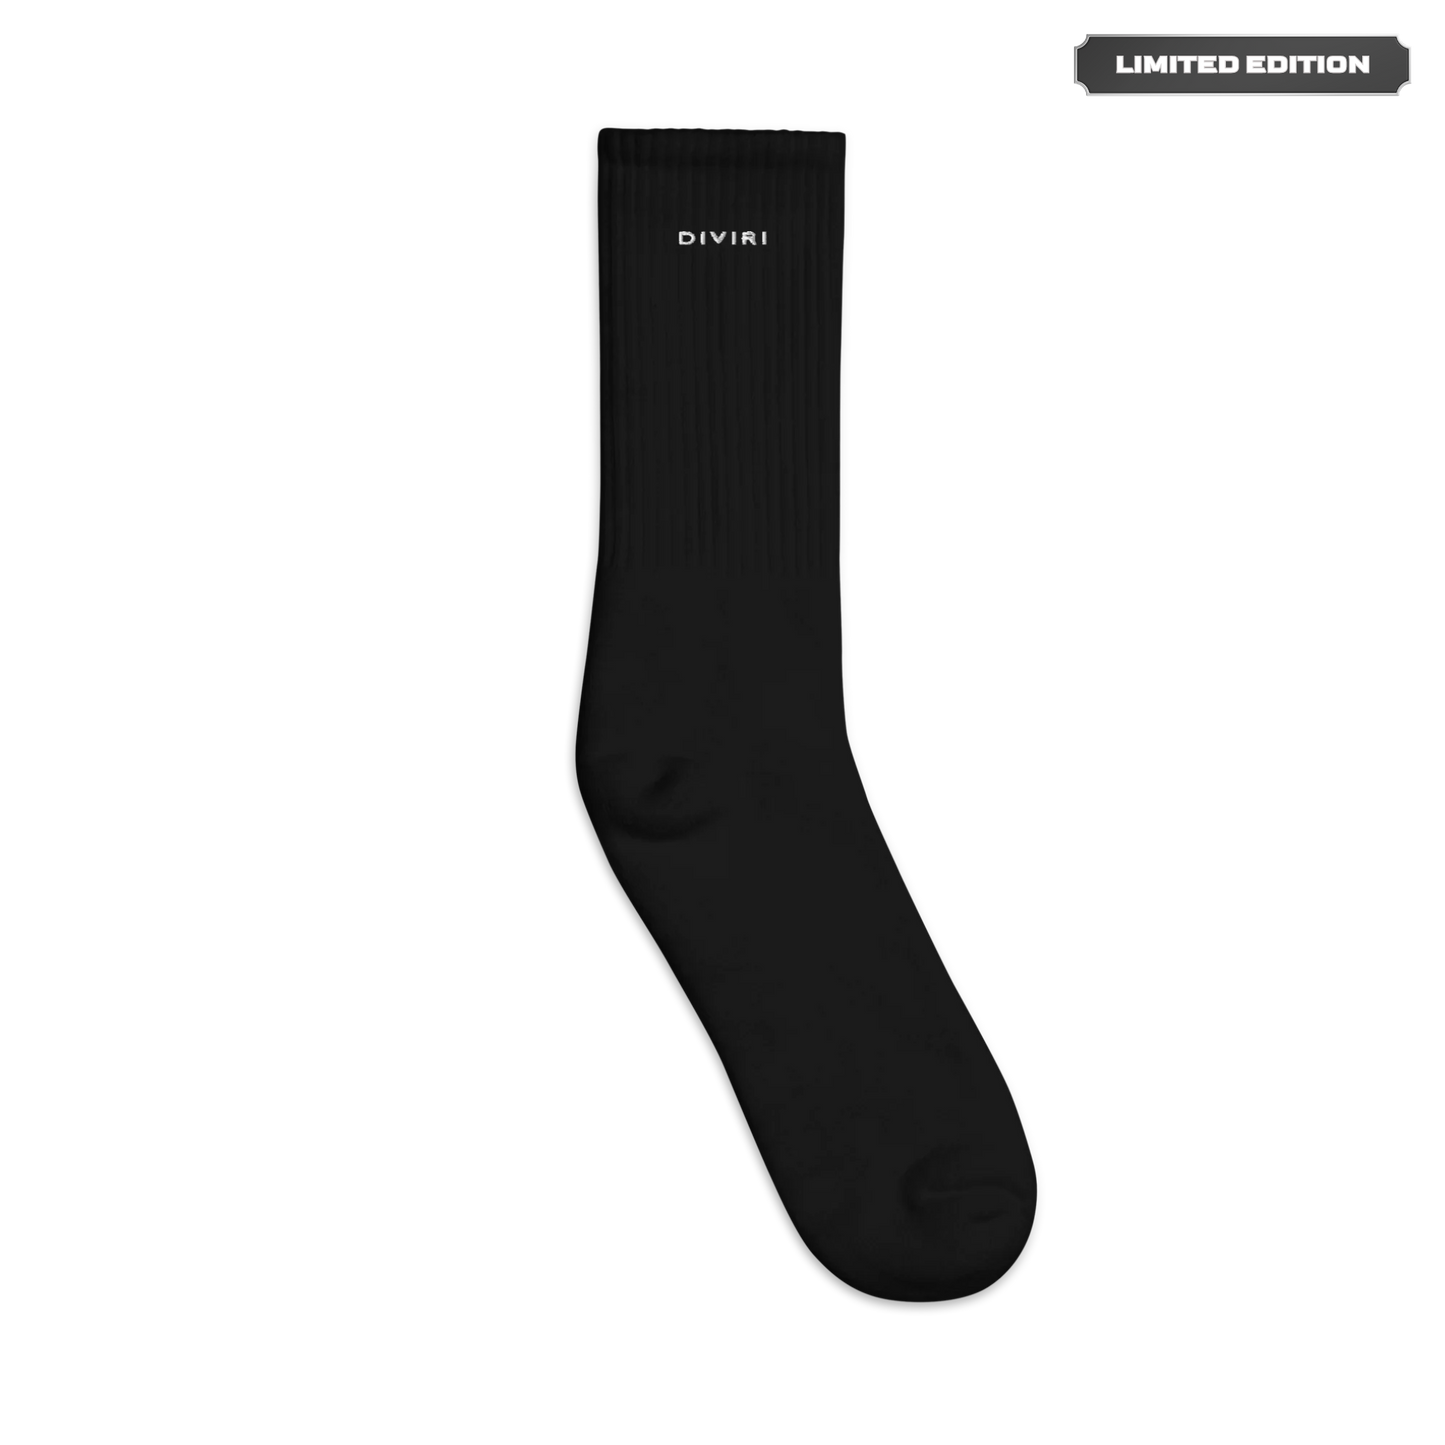 DIVIRI Premium Socks (Limited Edition)